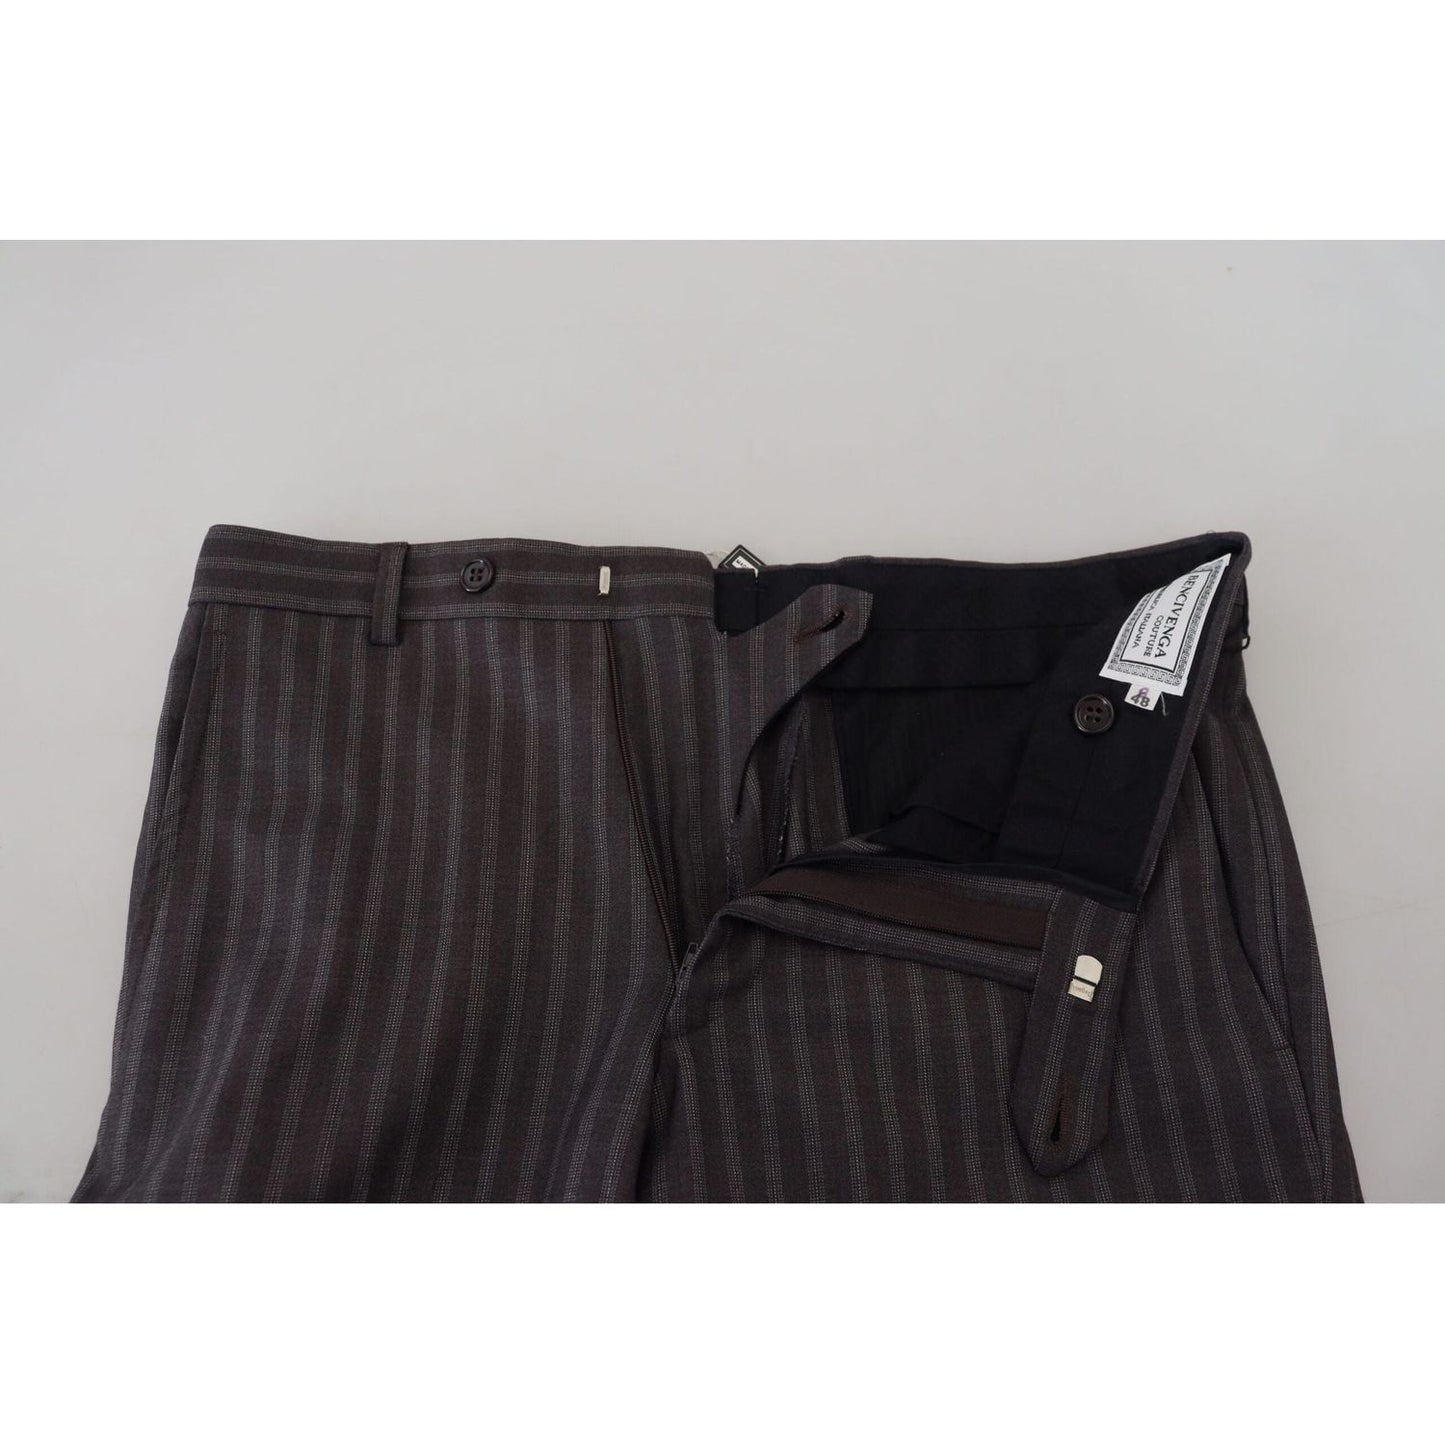 BENCIVENGA Elegant Striped Dress Pants for Men brown-stripes-slim-fit-men-pants IMG_0763-1-scaled-bfe2e194-828.jpg